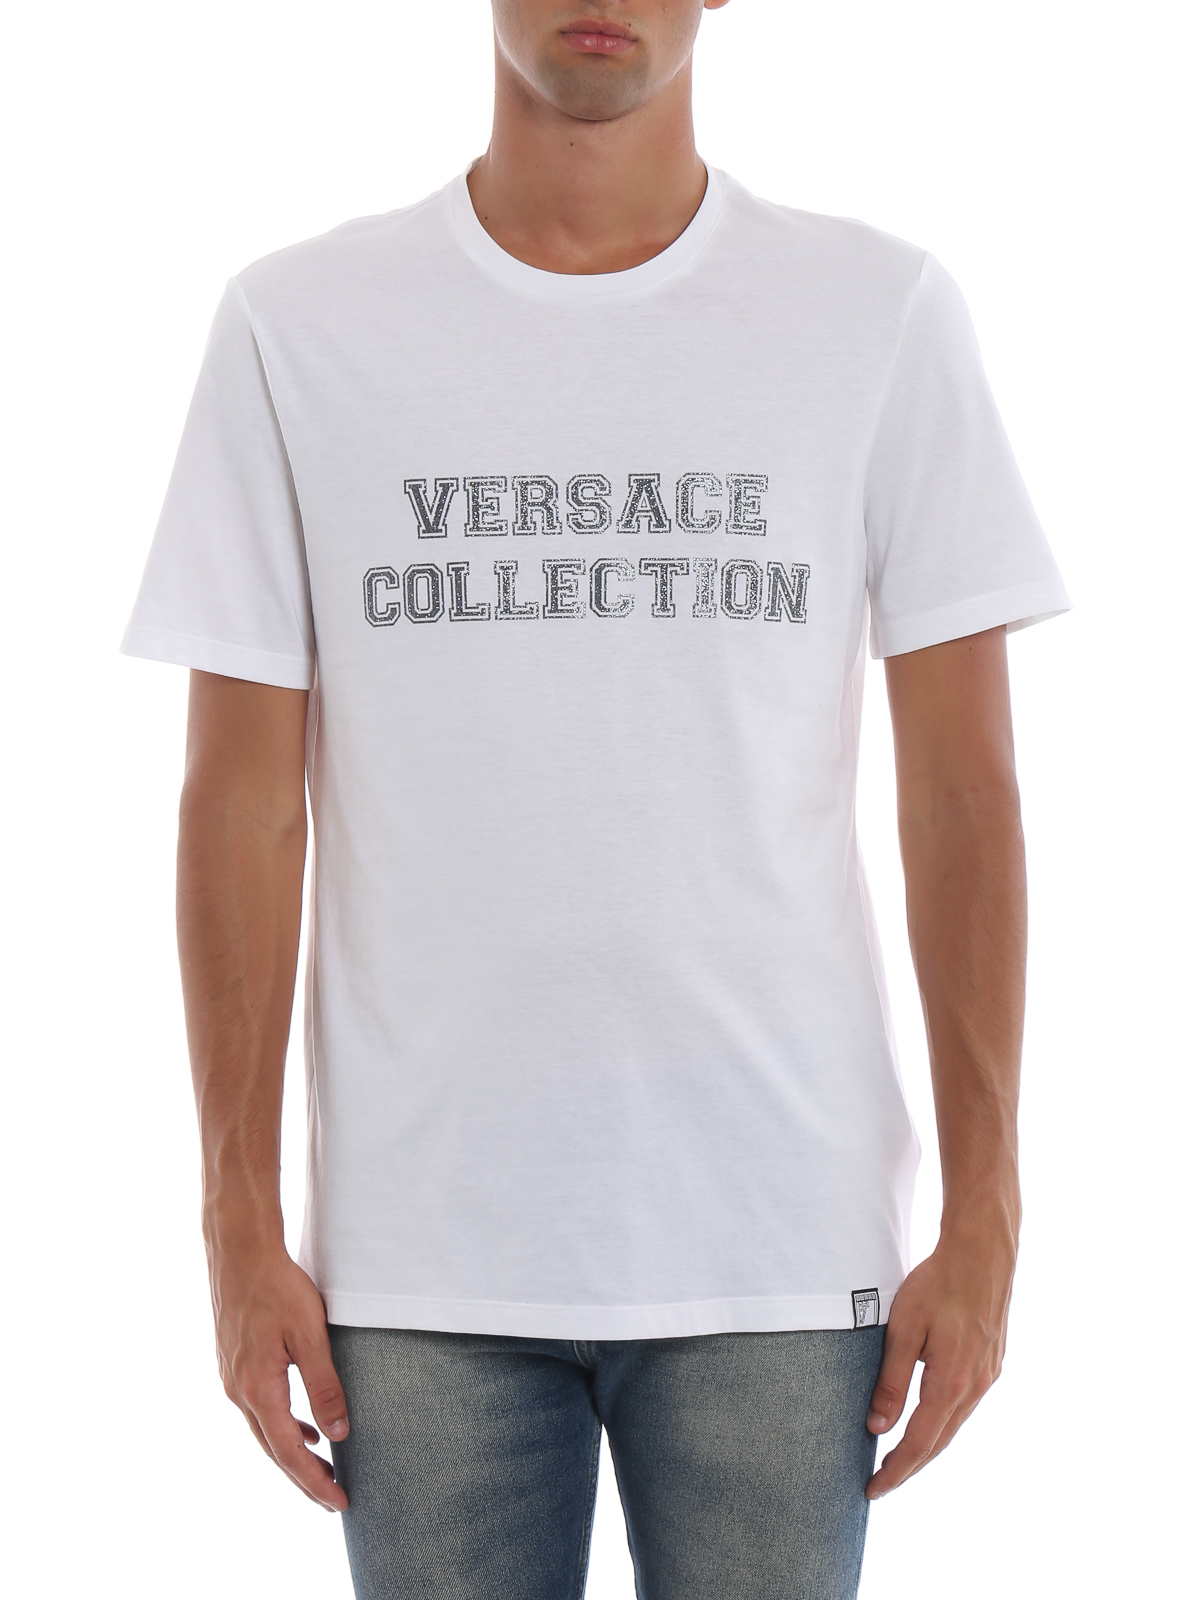 LF collection футболка мужская. Футболка Версаче оригинал. B C collection футболка. Collection t me